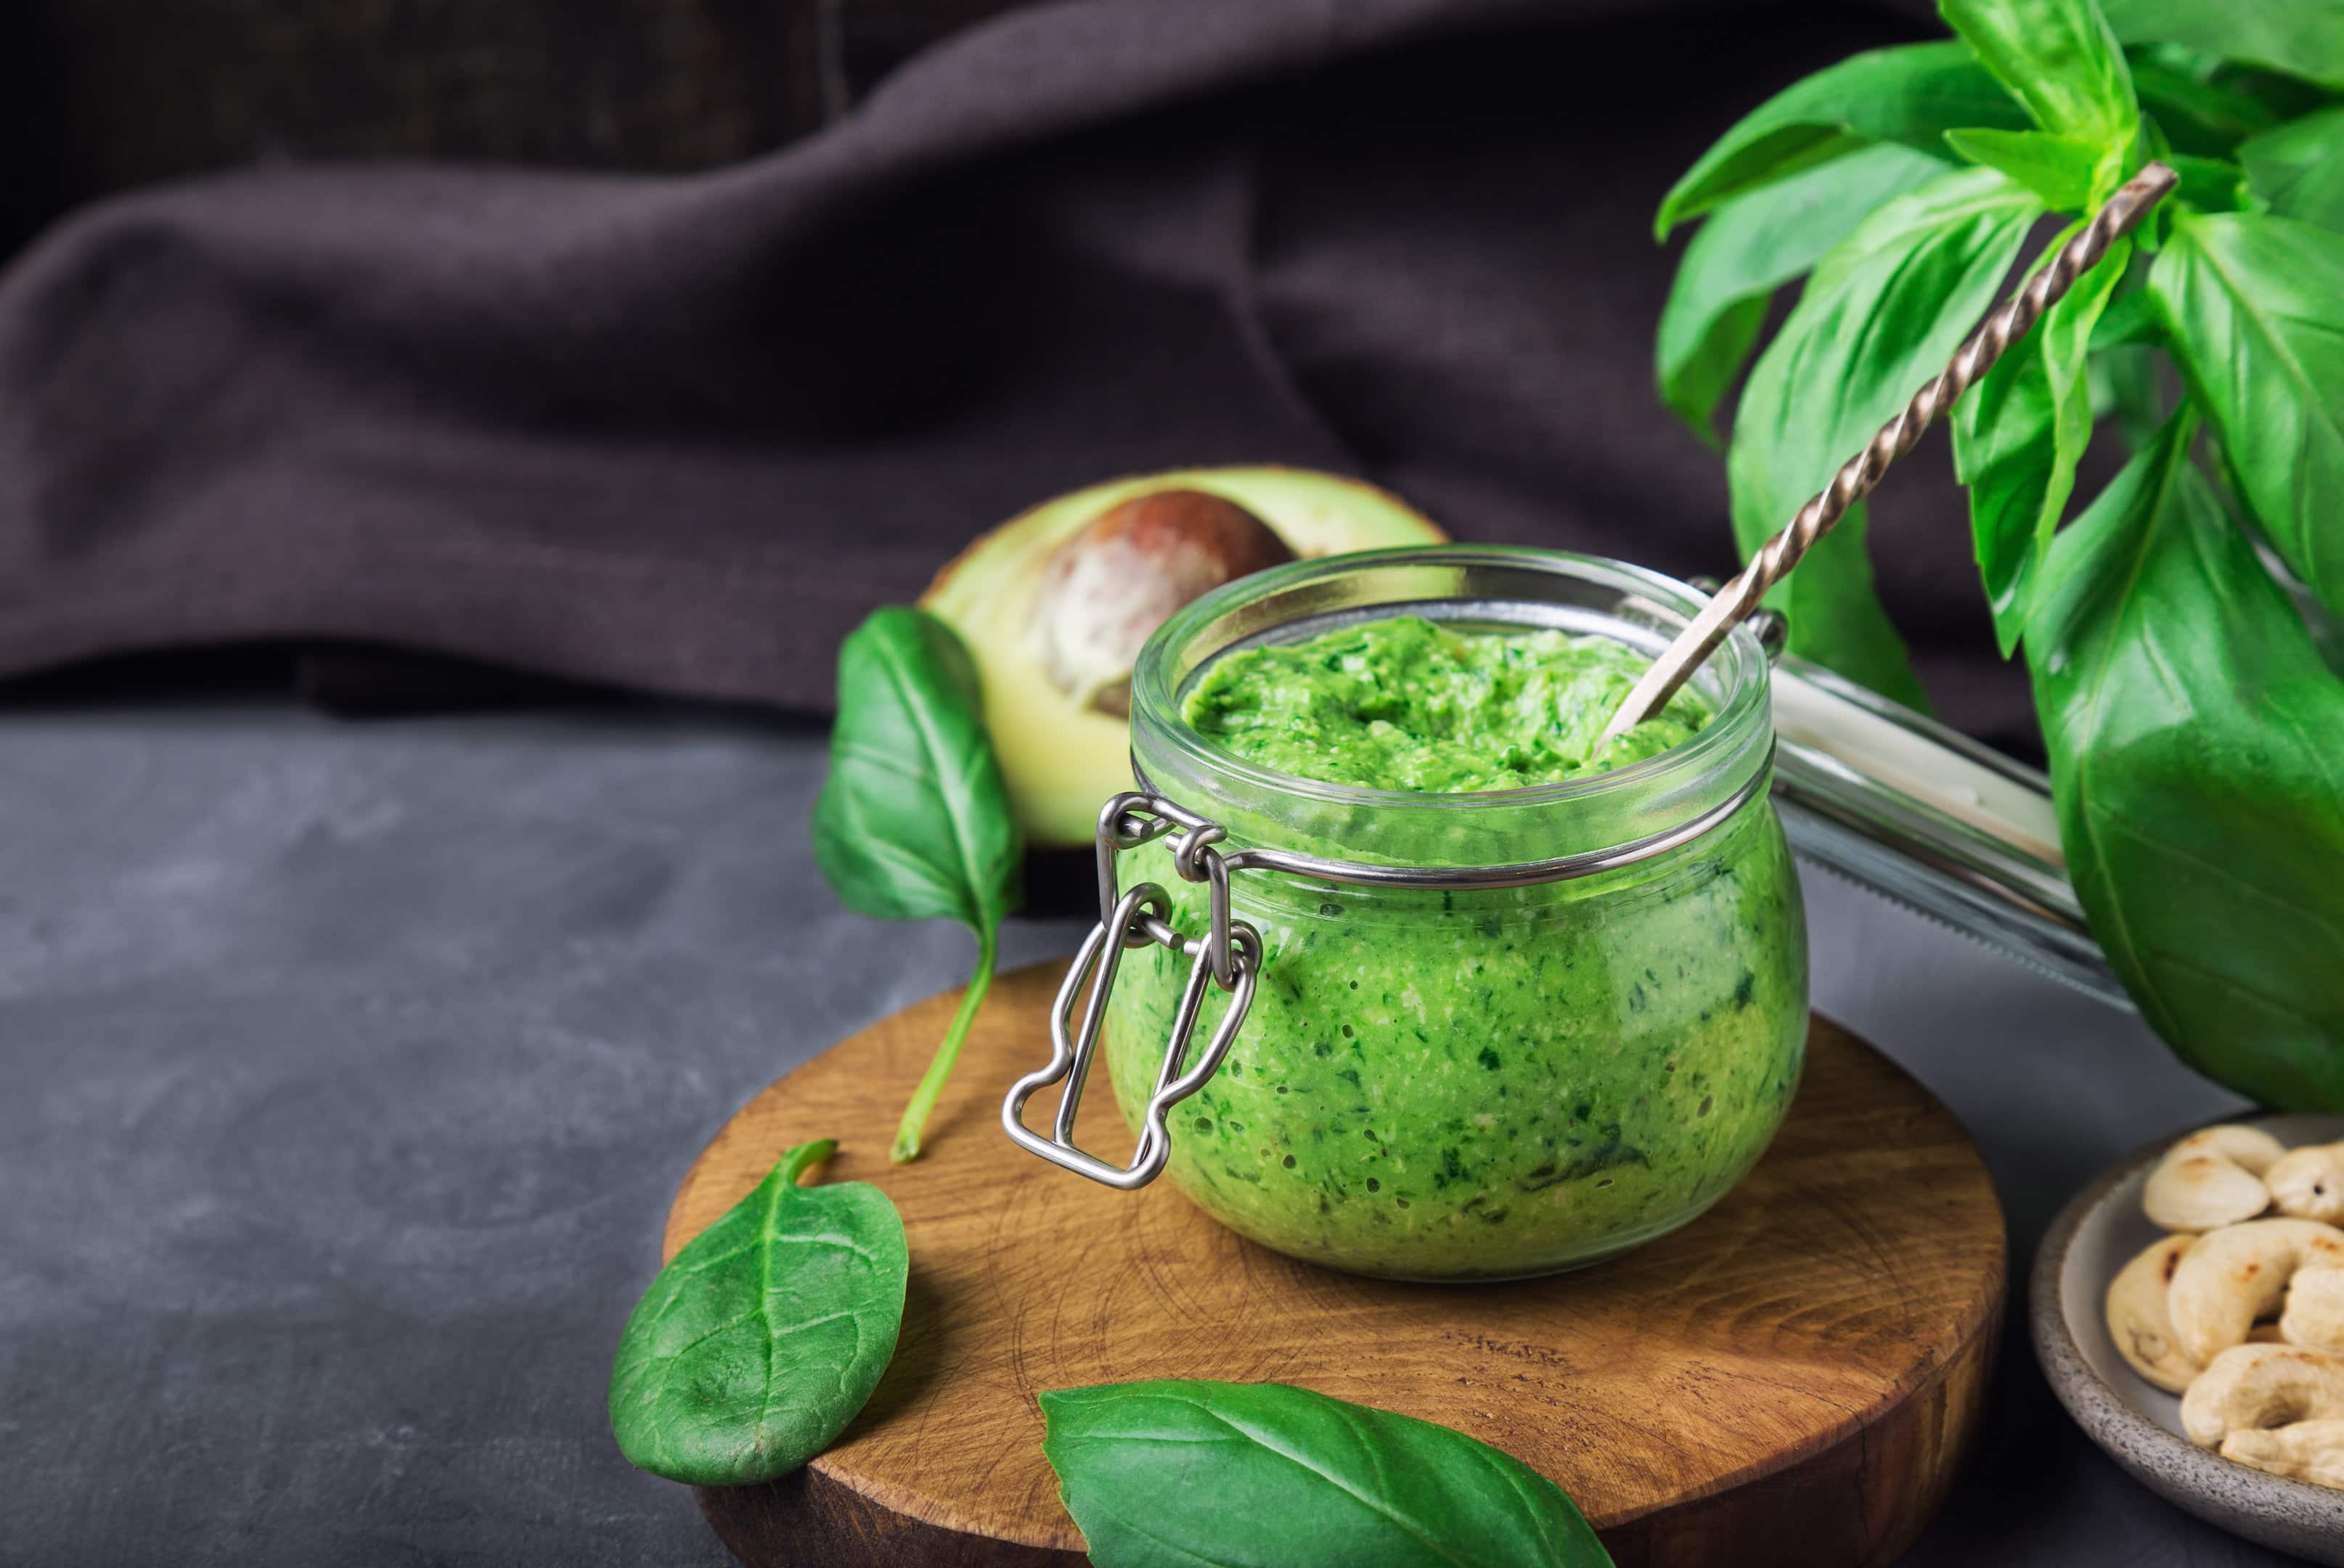 Fresh vegan spinach pesto recipe sauce with basil and pine nuts